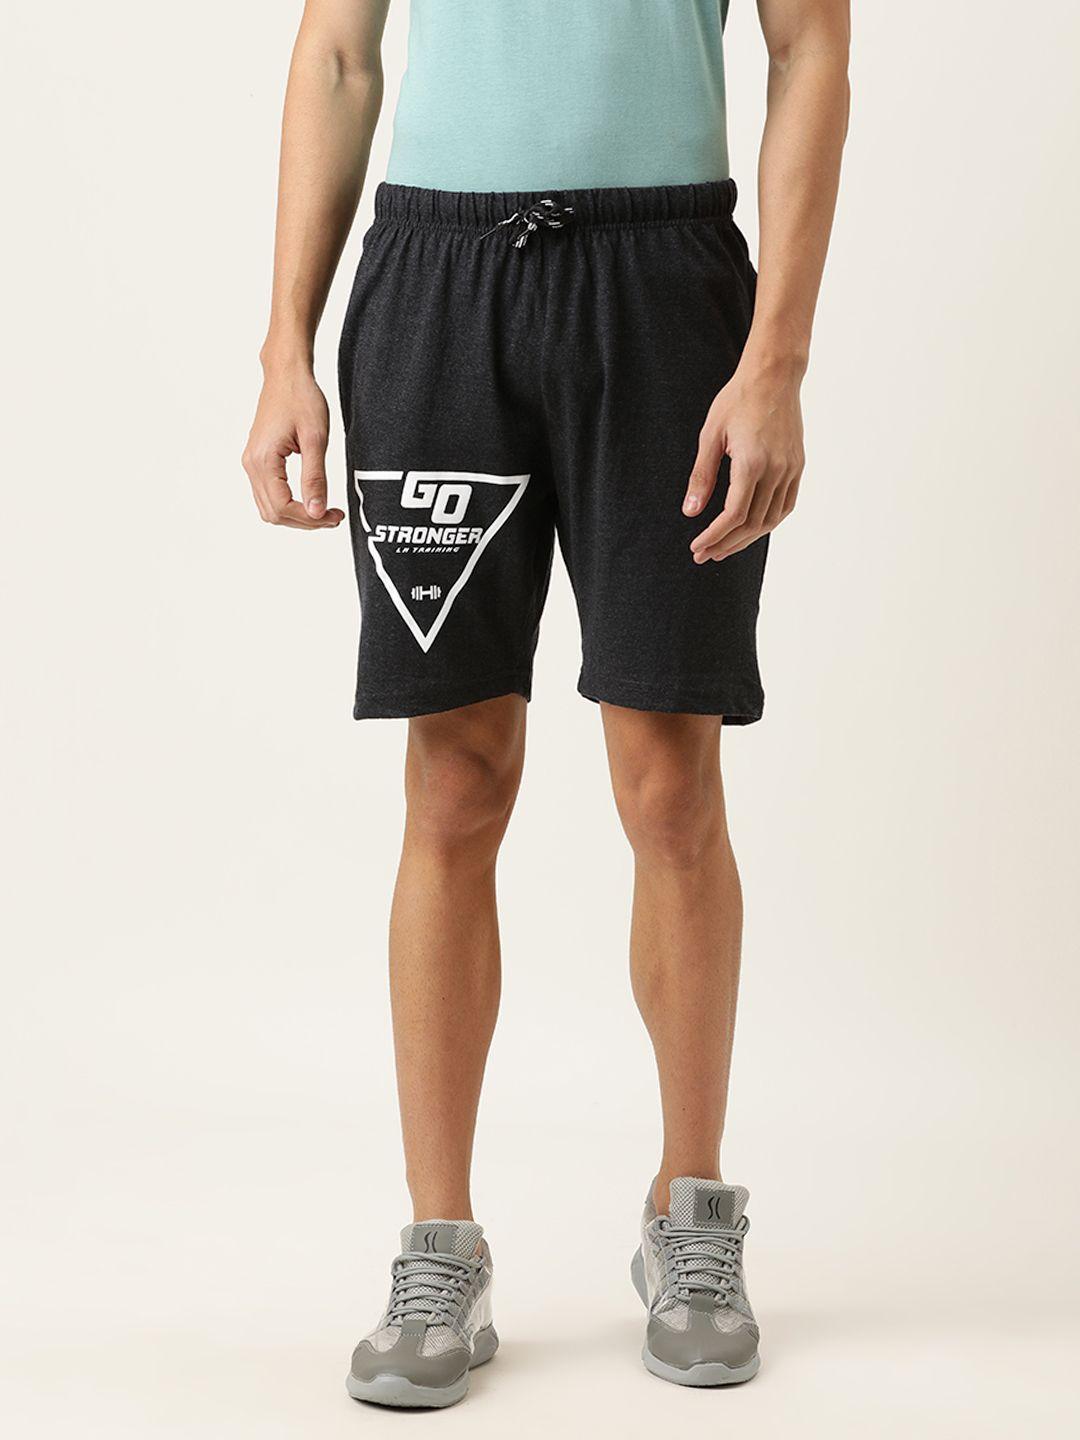 urban dog men charcoal black printed regular fit sports shorts